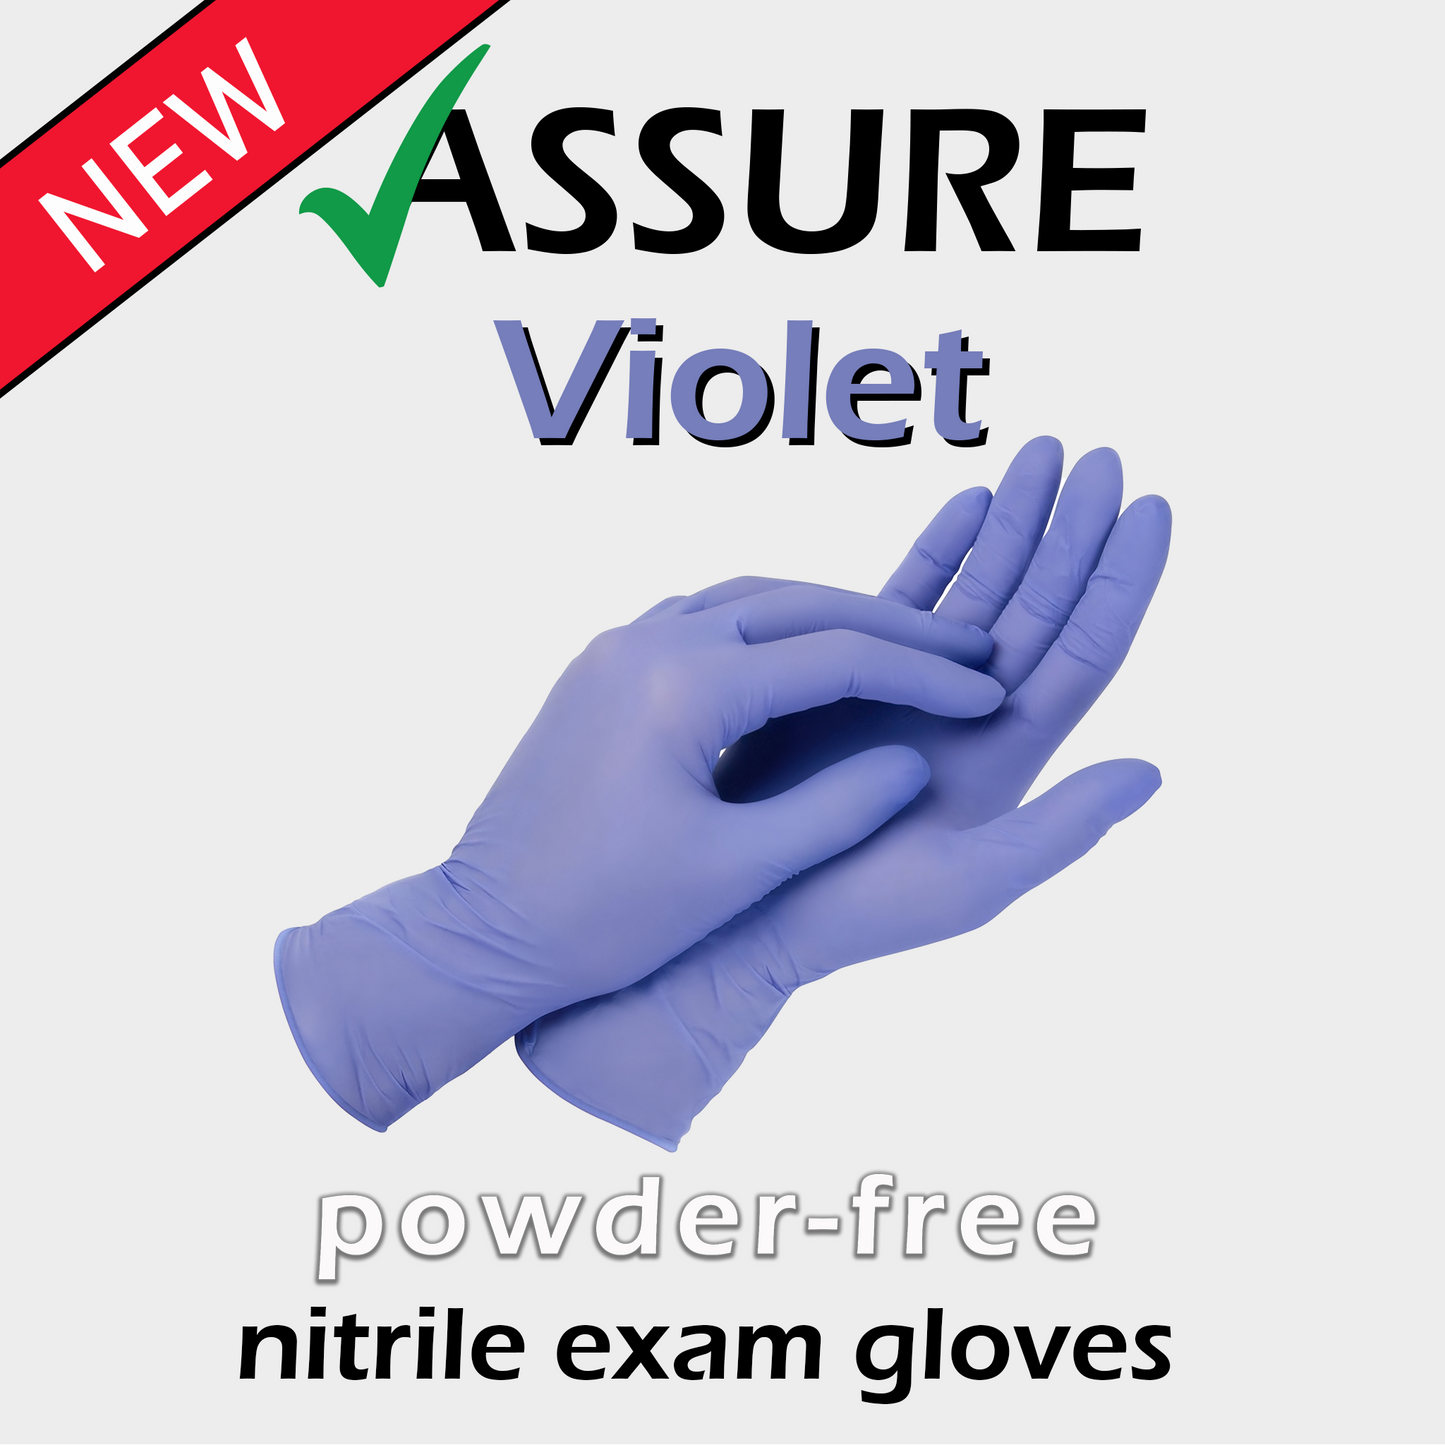 ASSURE Violet Nitrile Gloves $5.50 per box of 100, 10 boxes per carton